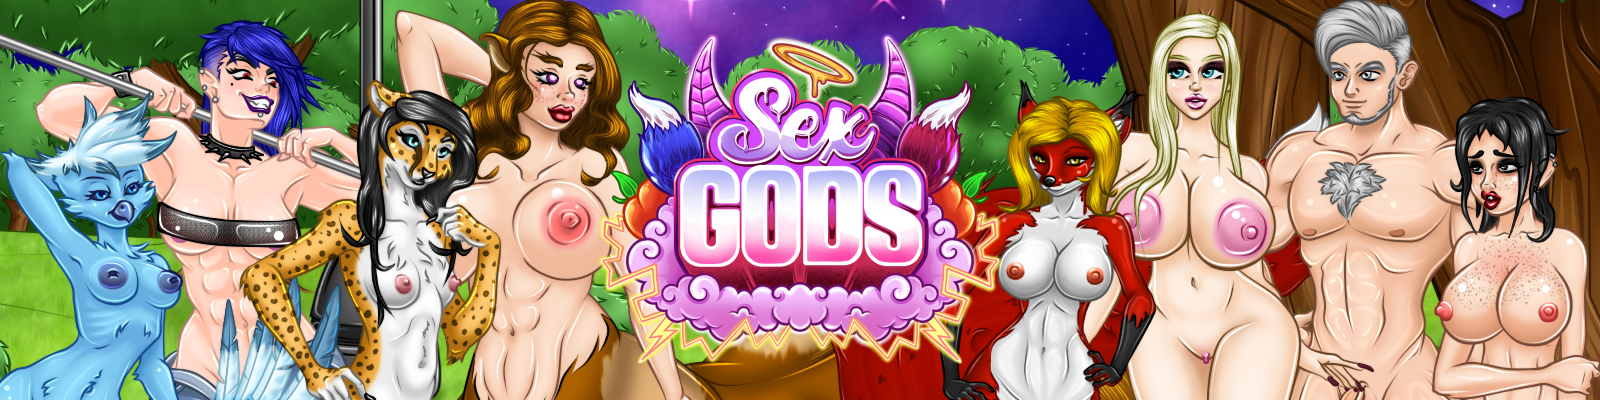 Sex Goda - Sex Gods by Guapoman